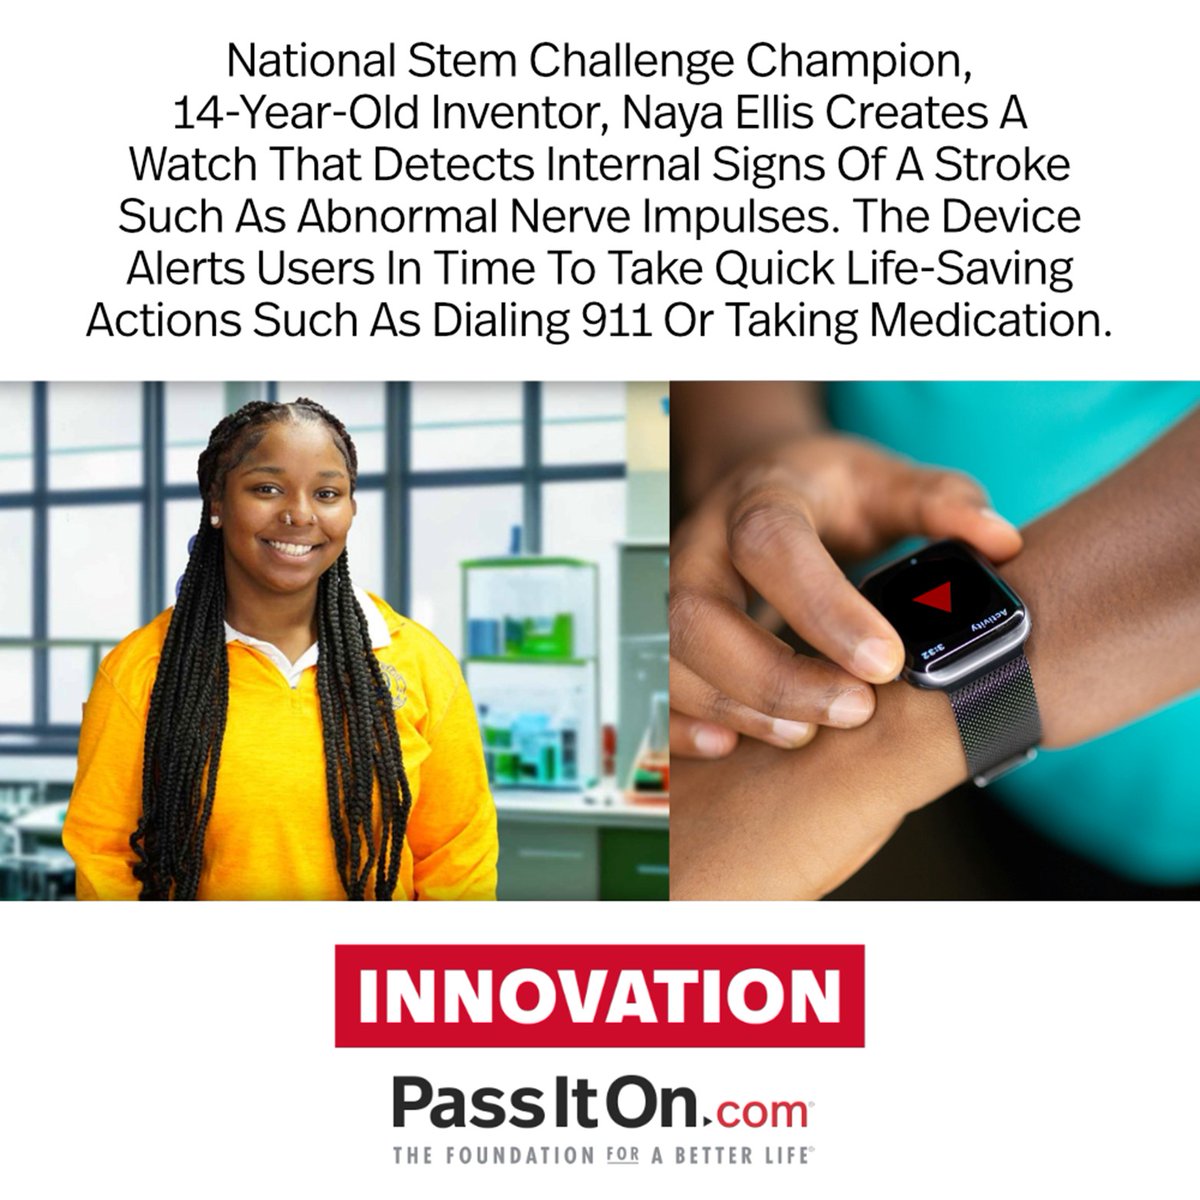 Innovation > PassItOn . . . #innovation #passiton #innovate #stem #youth #savinglives #inspiration #motivation #inspirationalquotes #values #valuesmatter